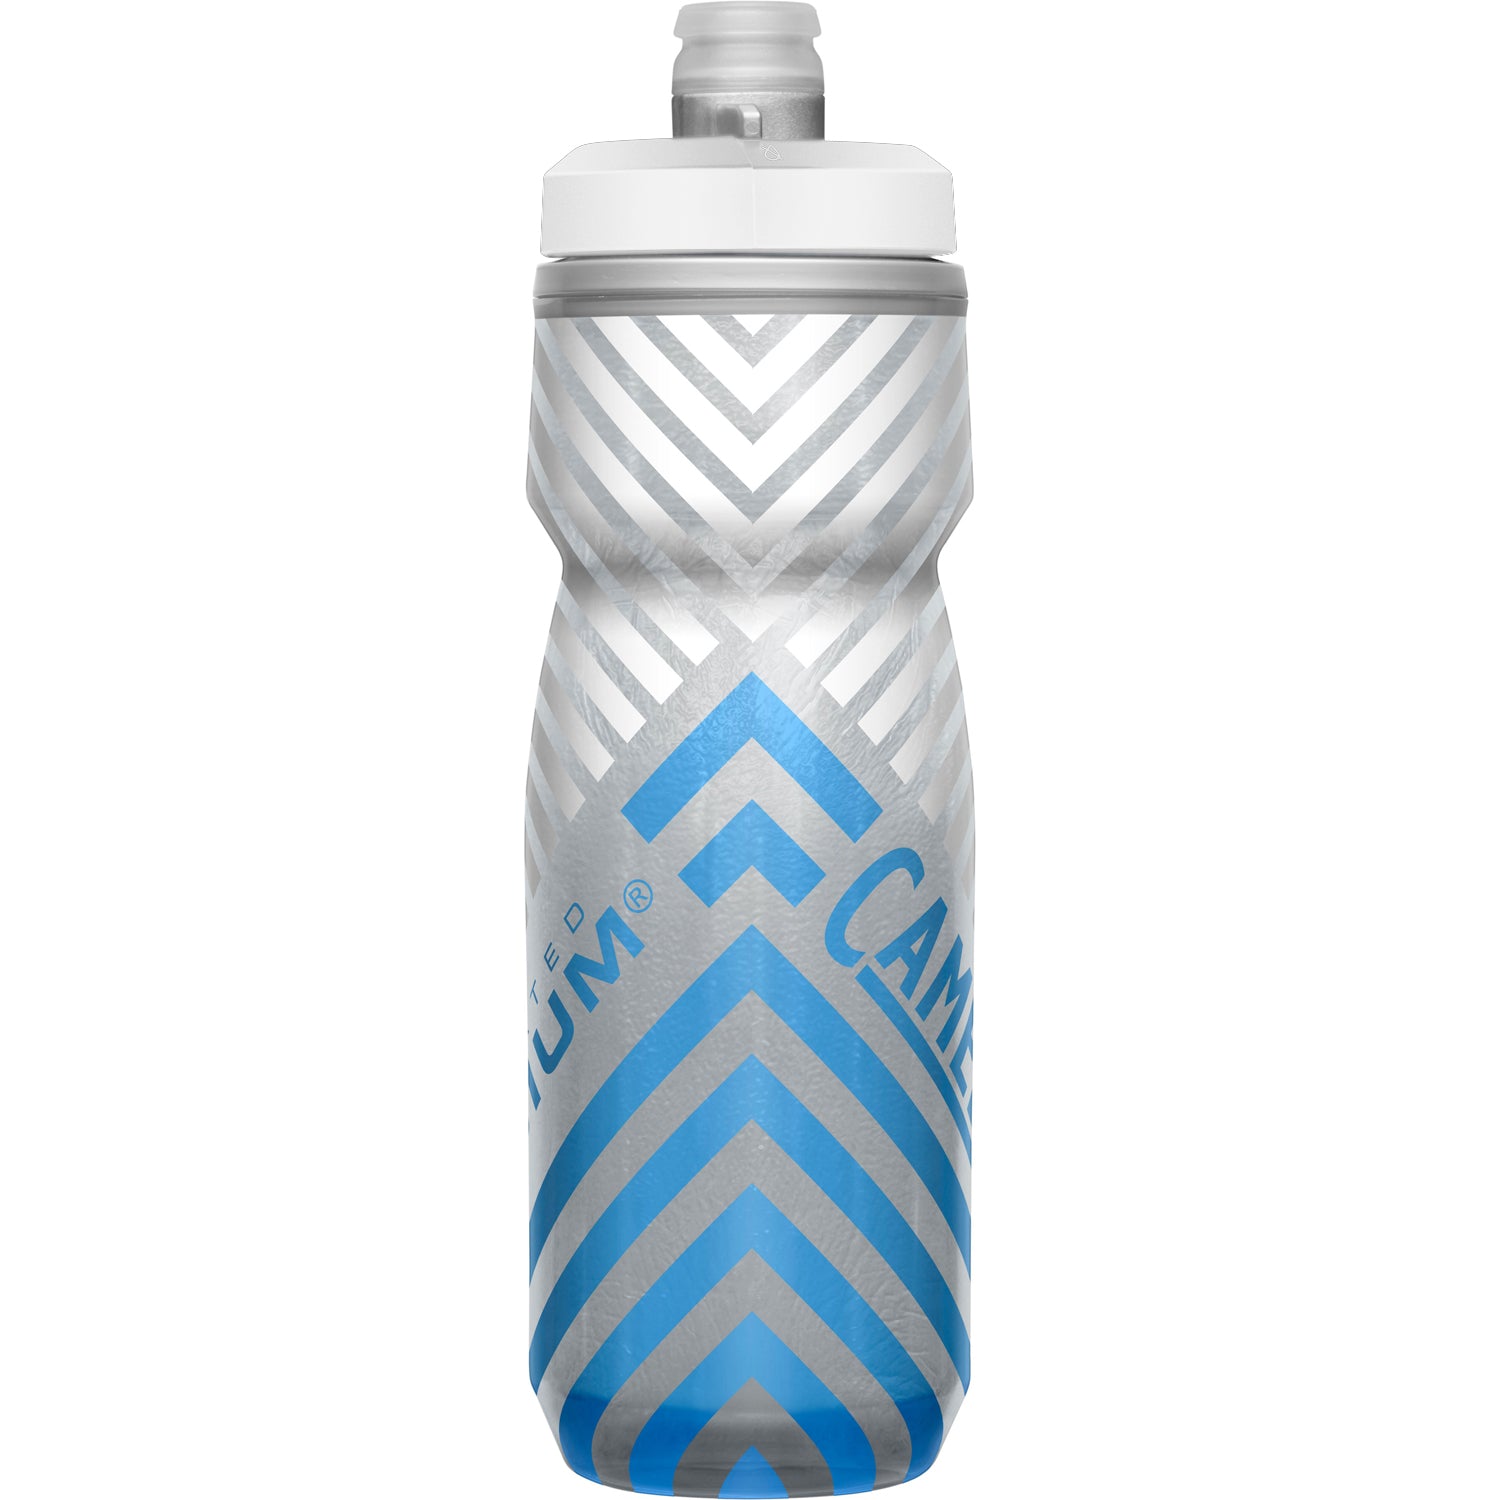 Camelbak Podium Chill Outdoor Bottle, Grey/Blue - 21OZ/620 ML - Best Price online Prokicksports.com